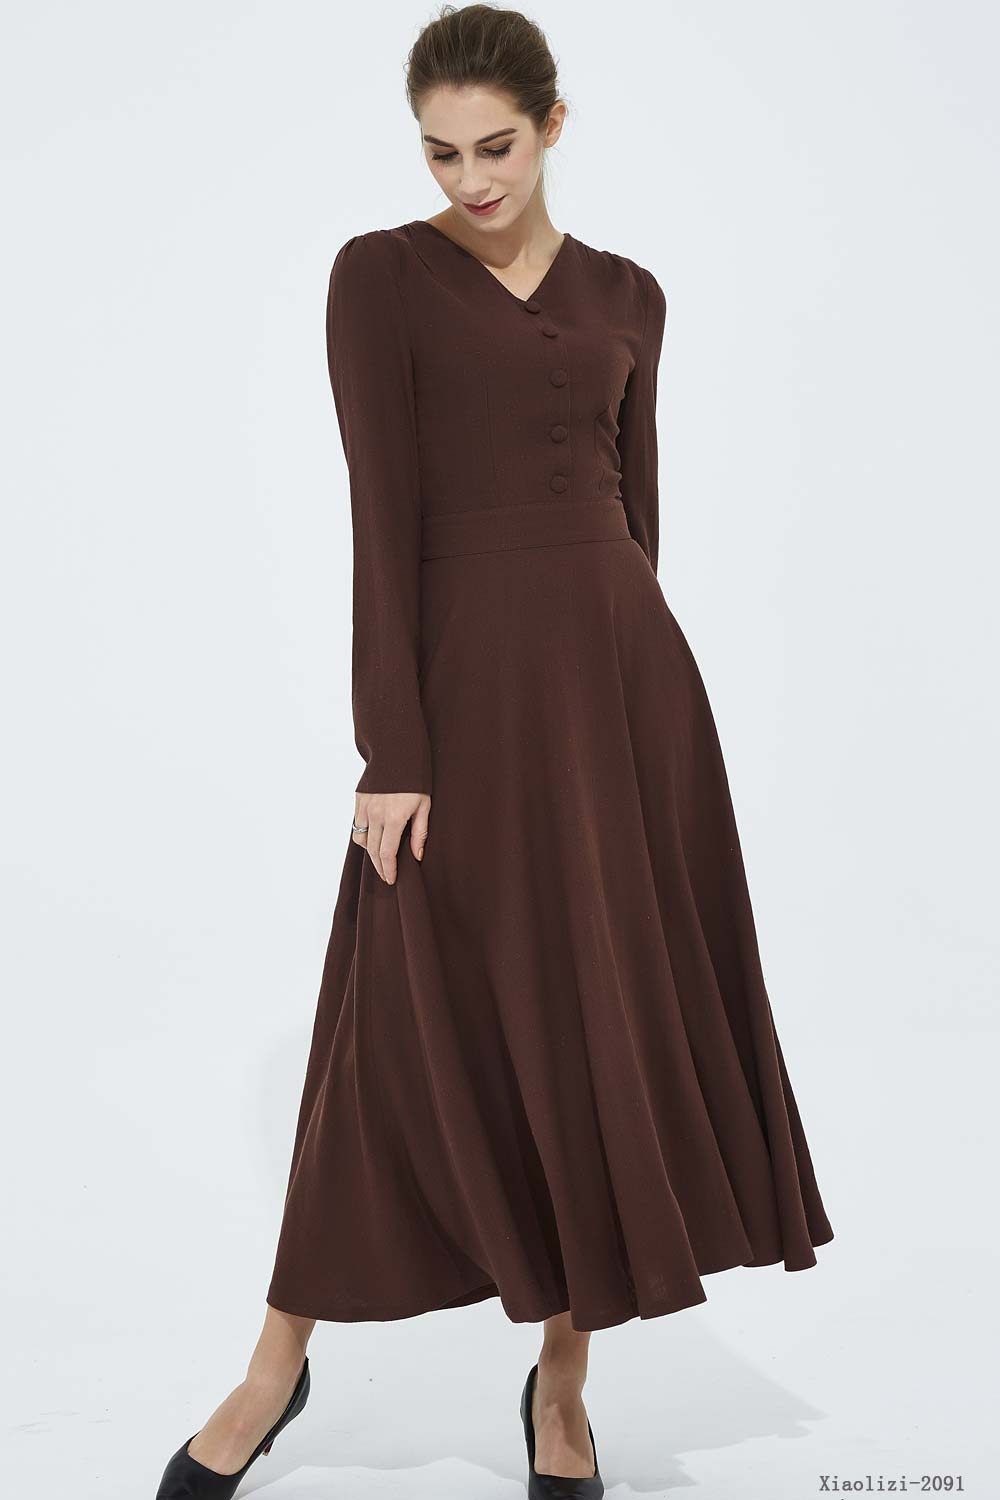 Long sleeve button front swing dress 2091#